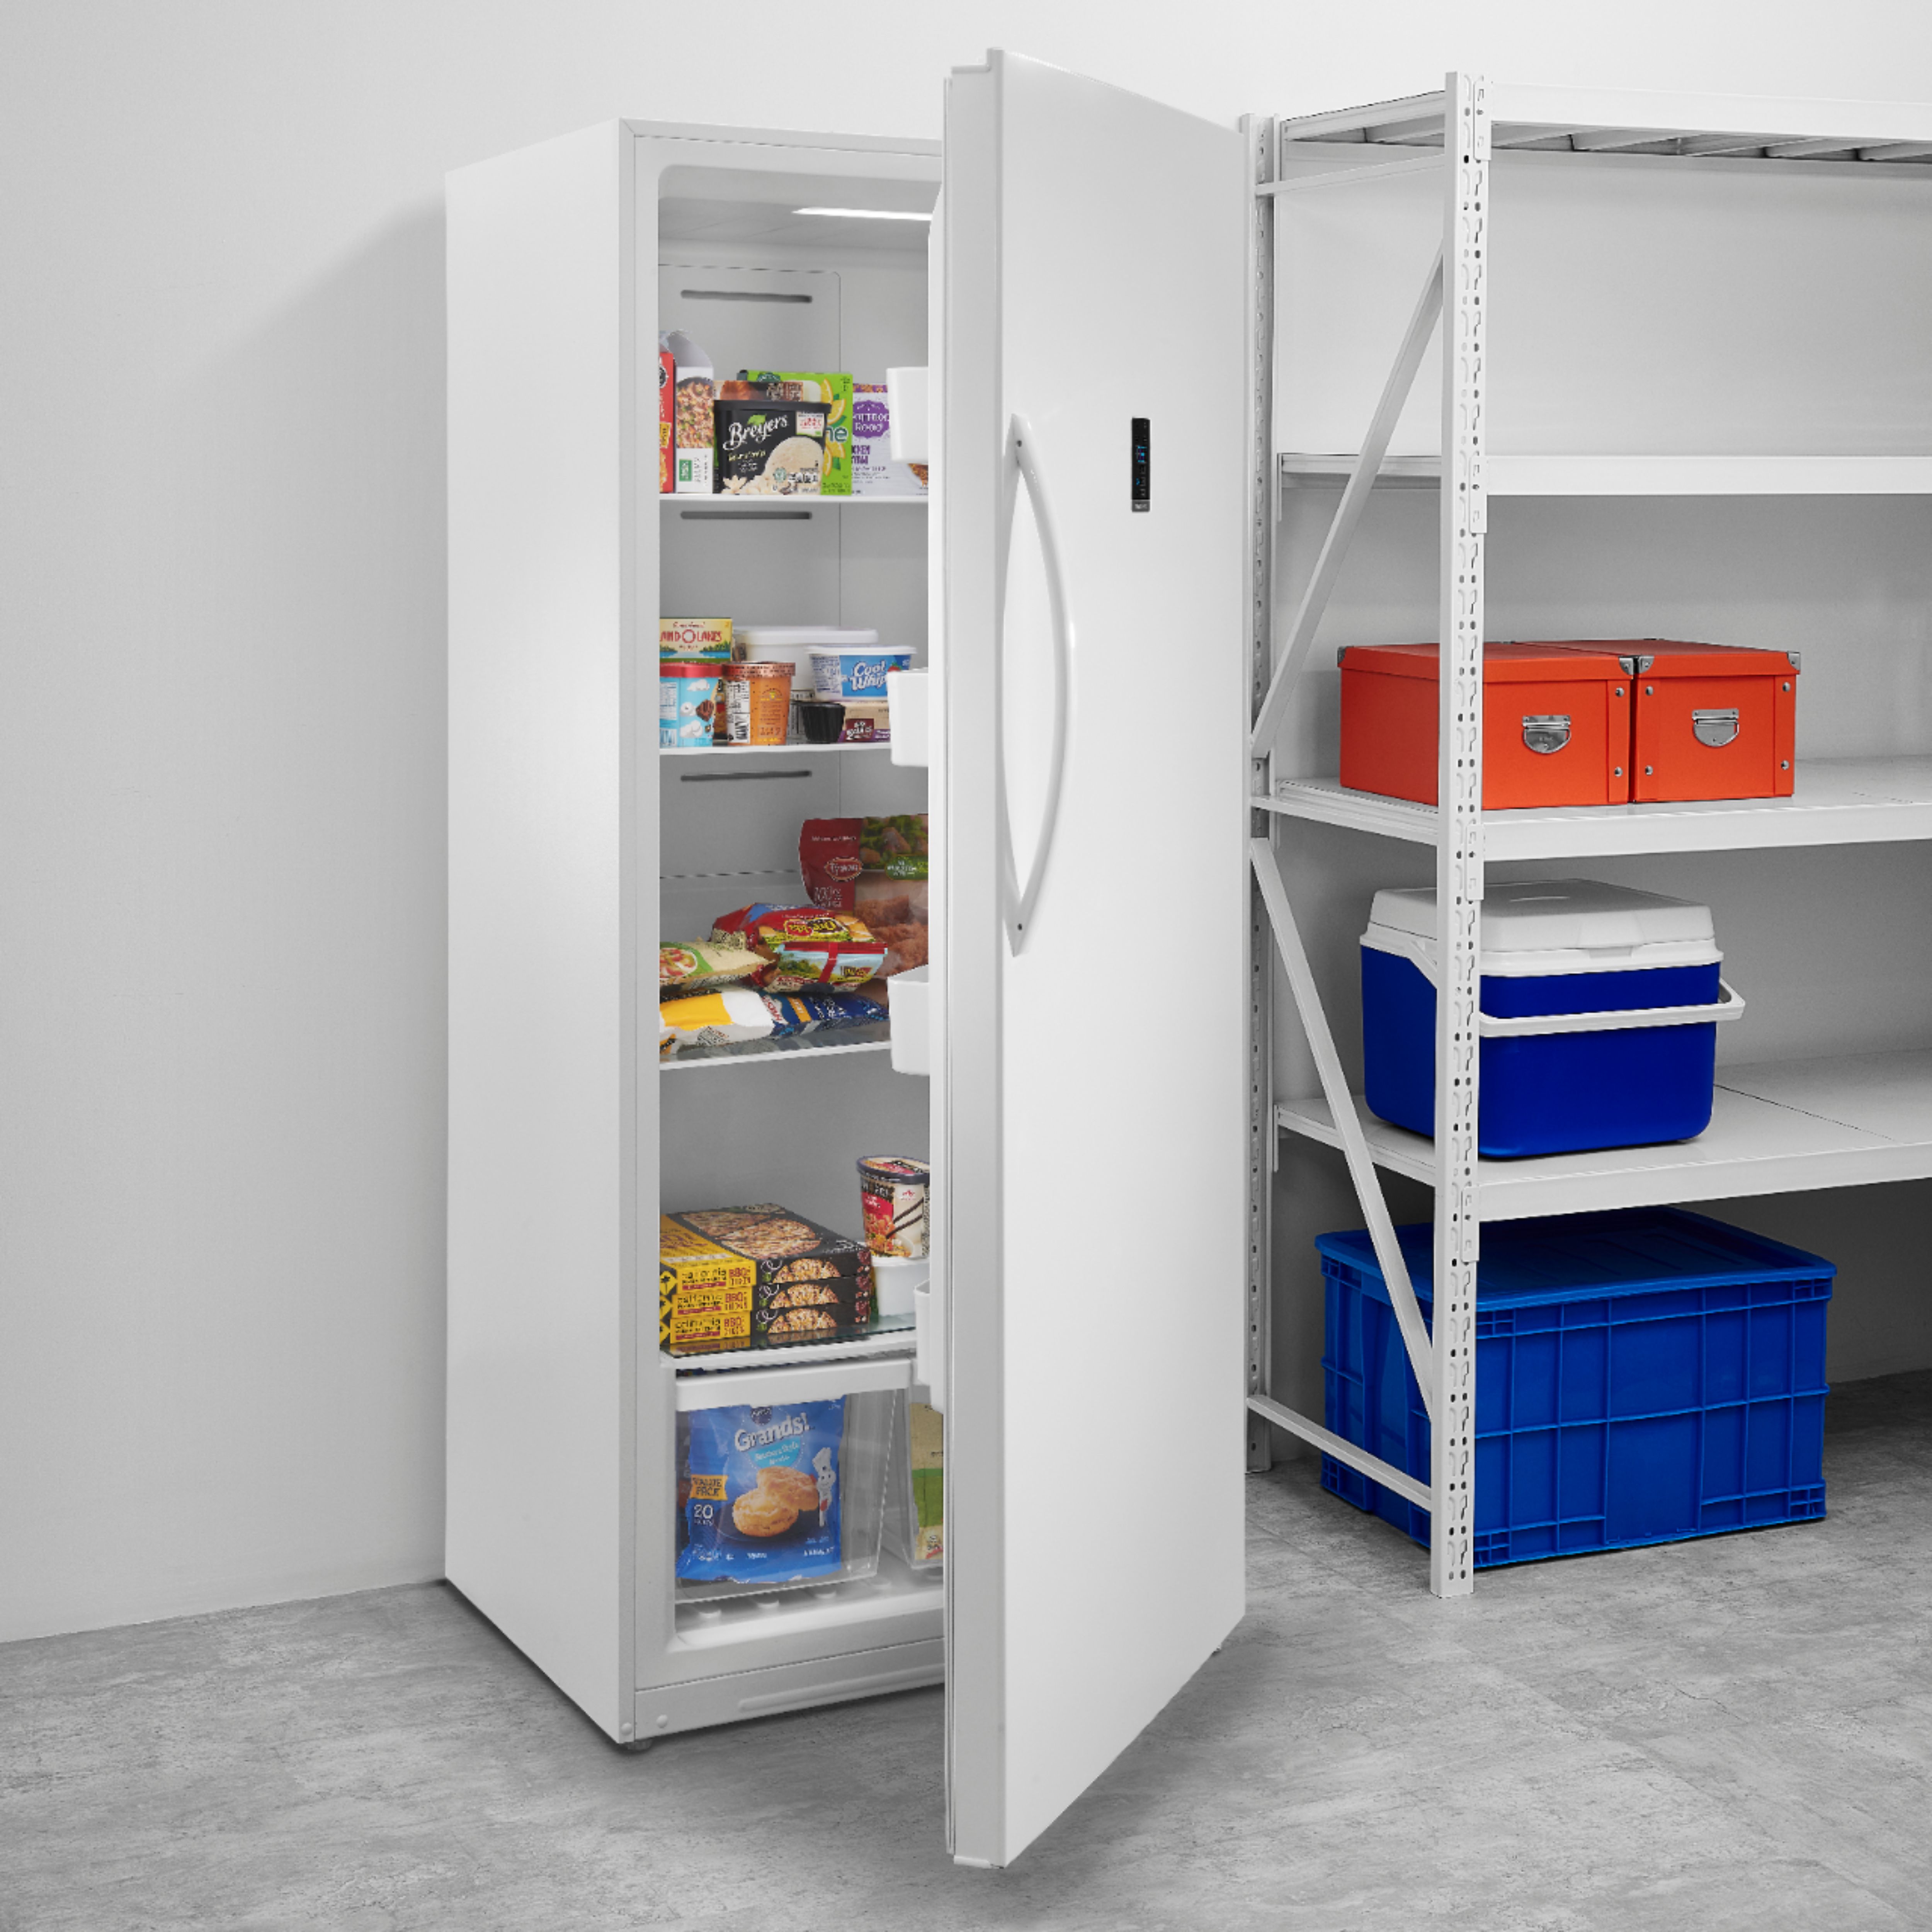 SMAD 21 Cu.Ft Large Upright Freezer, Convertible Freezer Refrigerator, –  Smad Electric Appliances